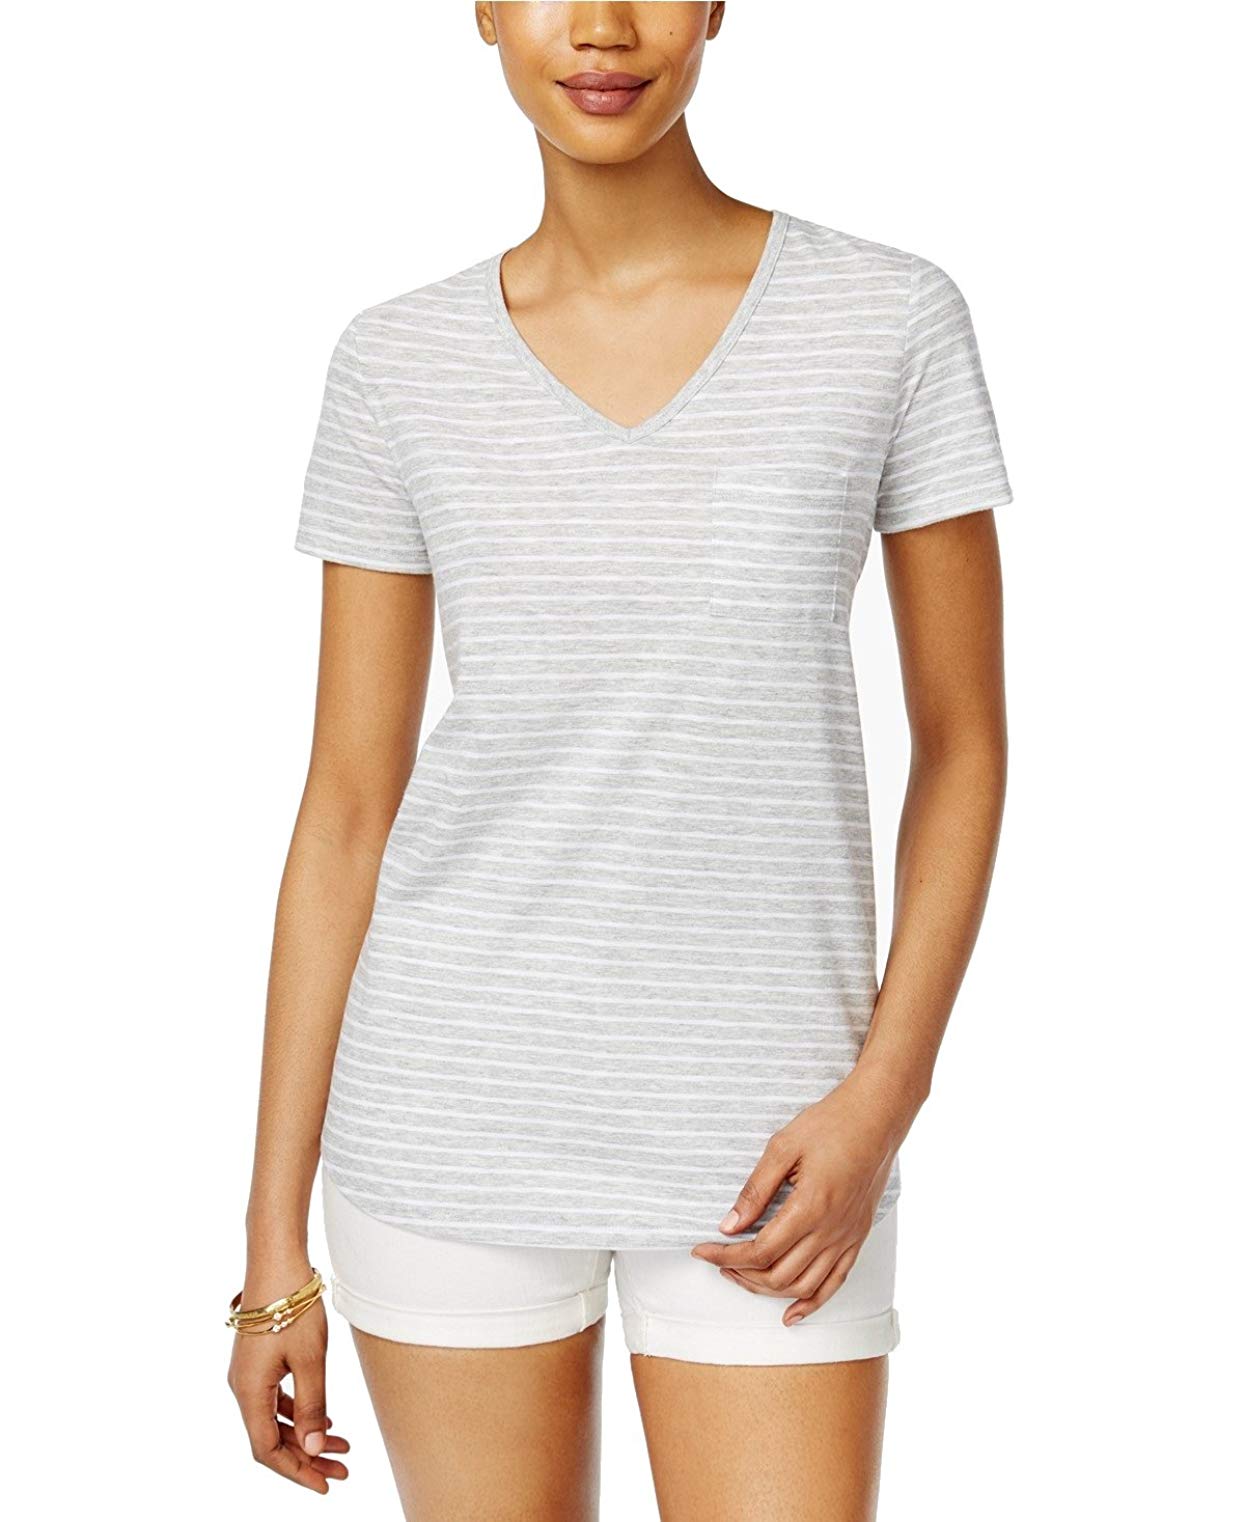 Style Co Striped T-Shirt Light GreyWhite XL